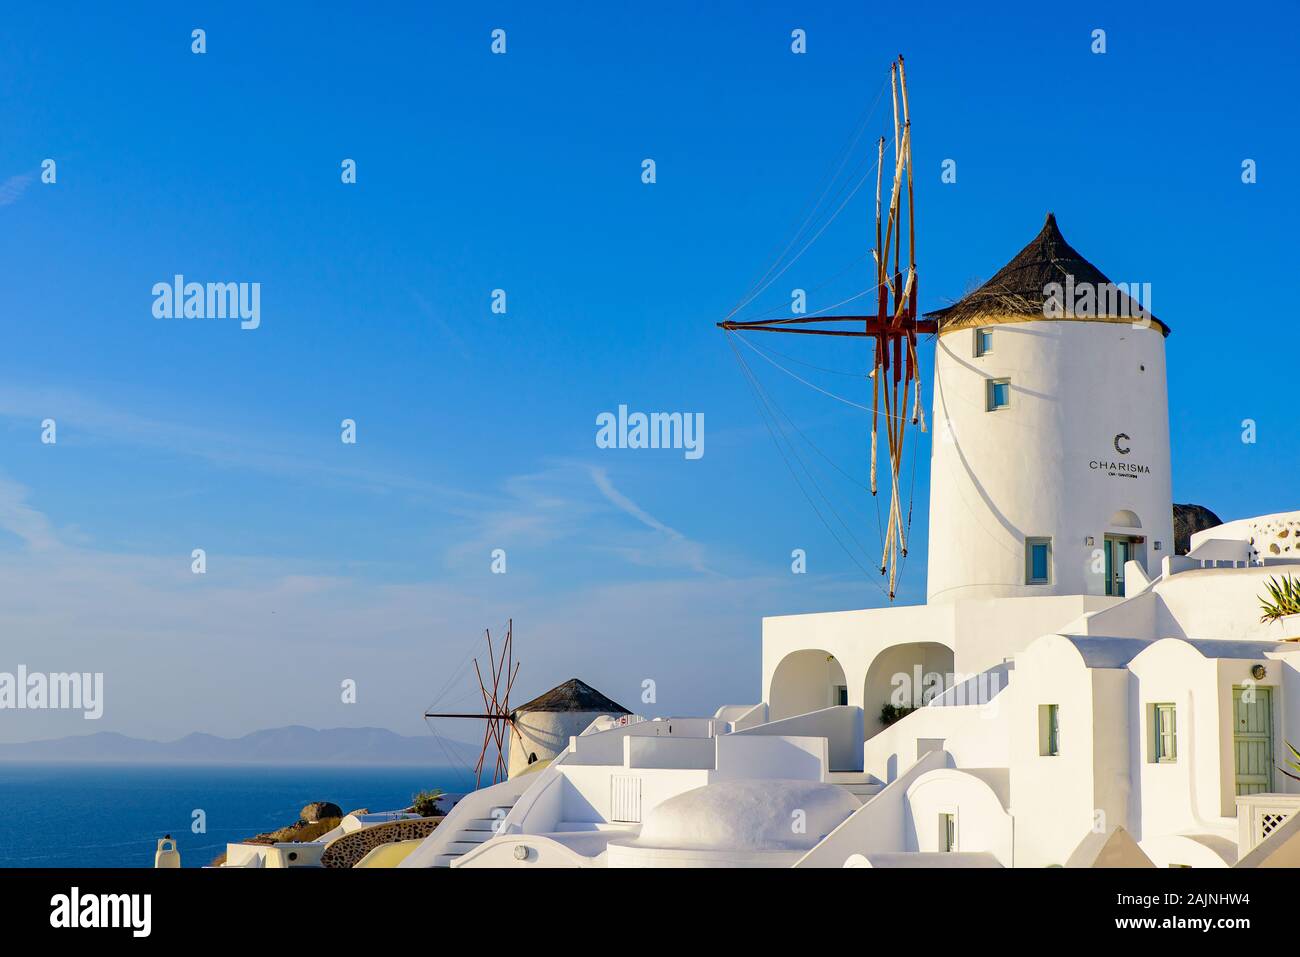 Windmill and traditional white buildings facing Aegean Sea in Oia, Santorini, Greece Stock Photo